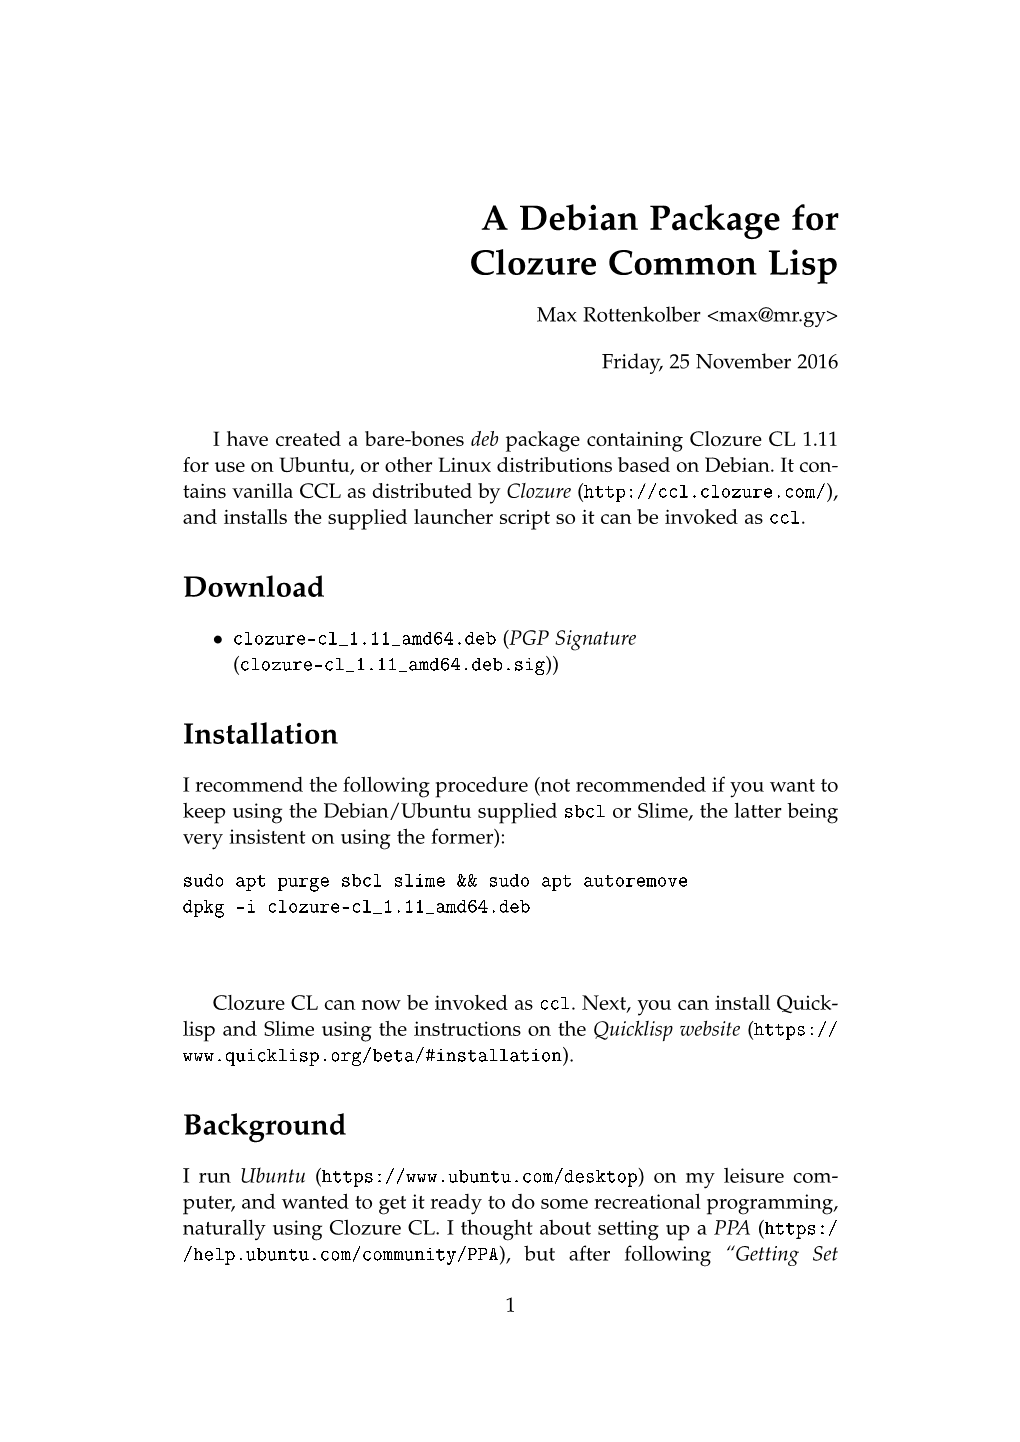 A Debian Package for Clozure Common Lisp